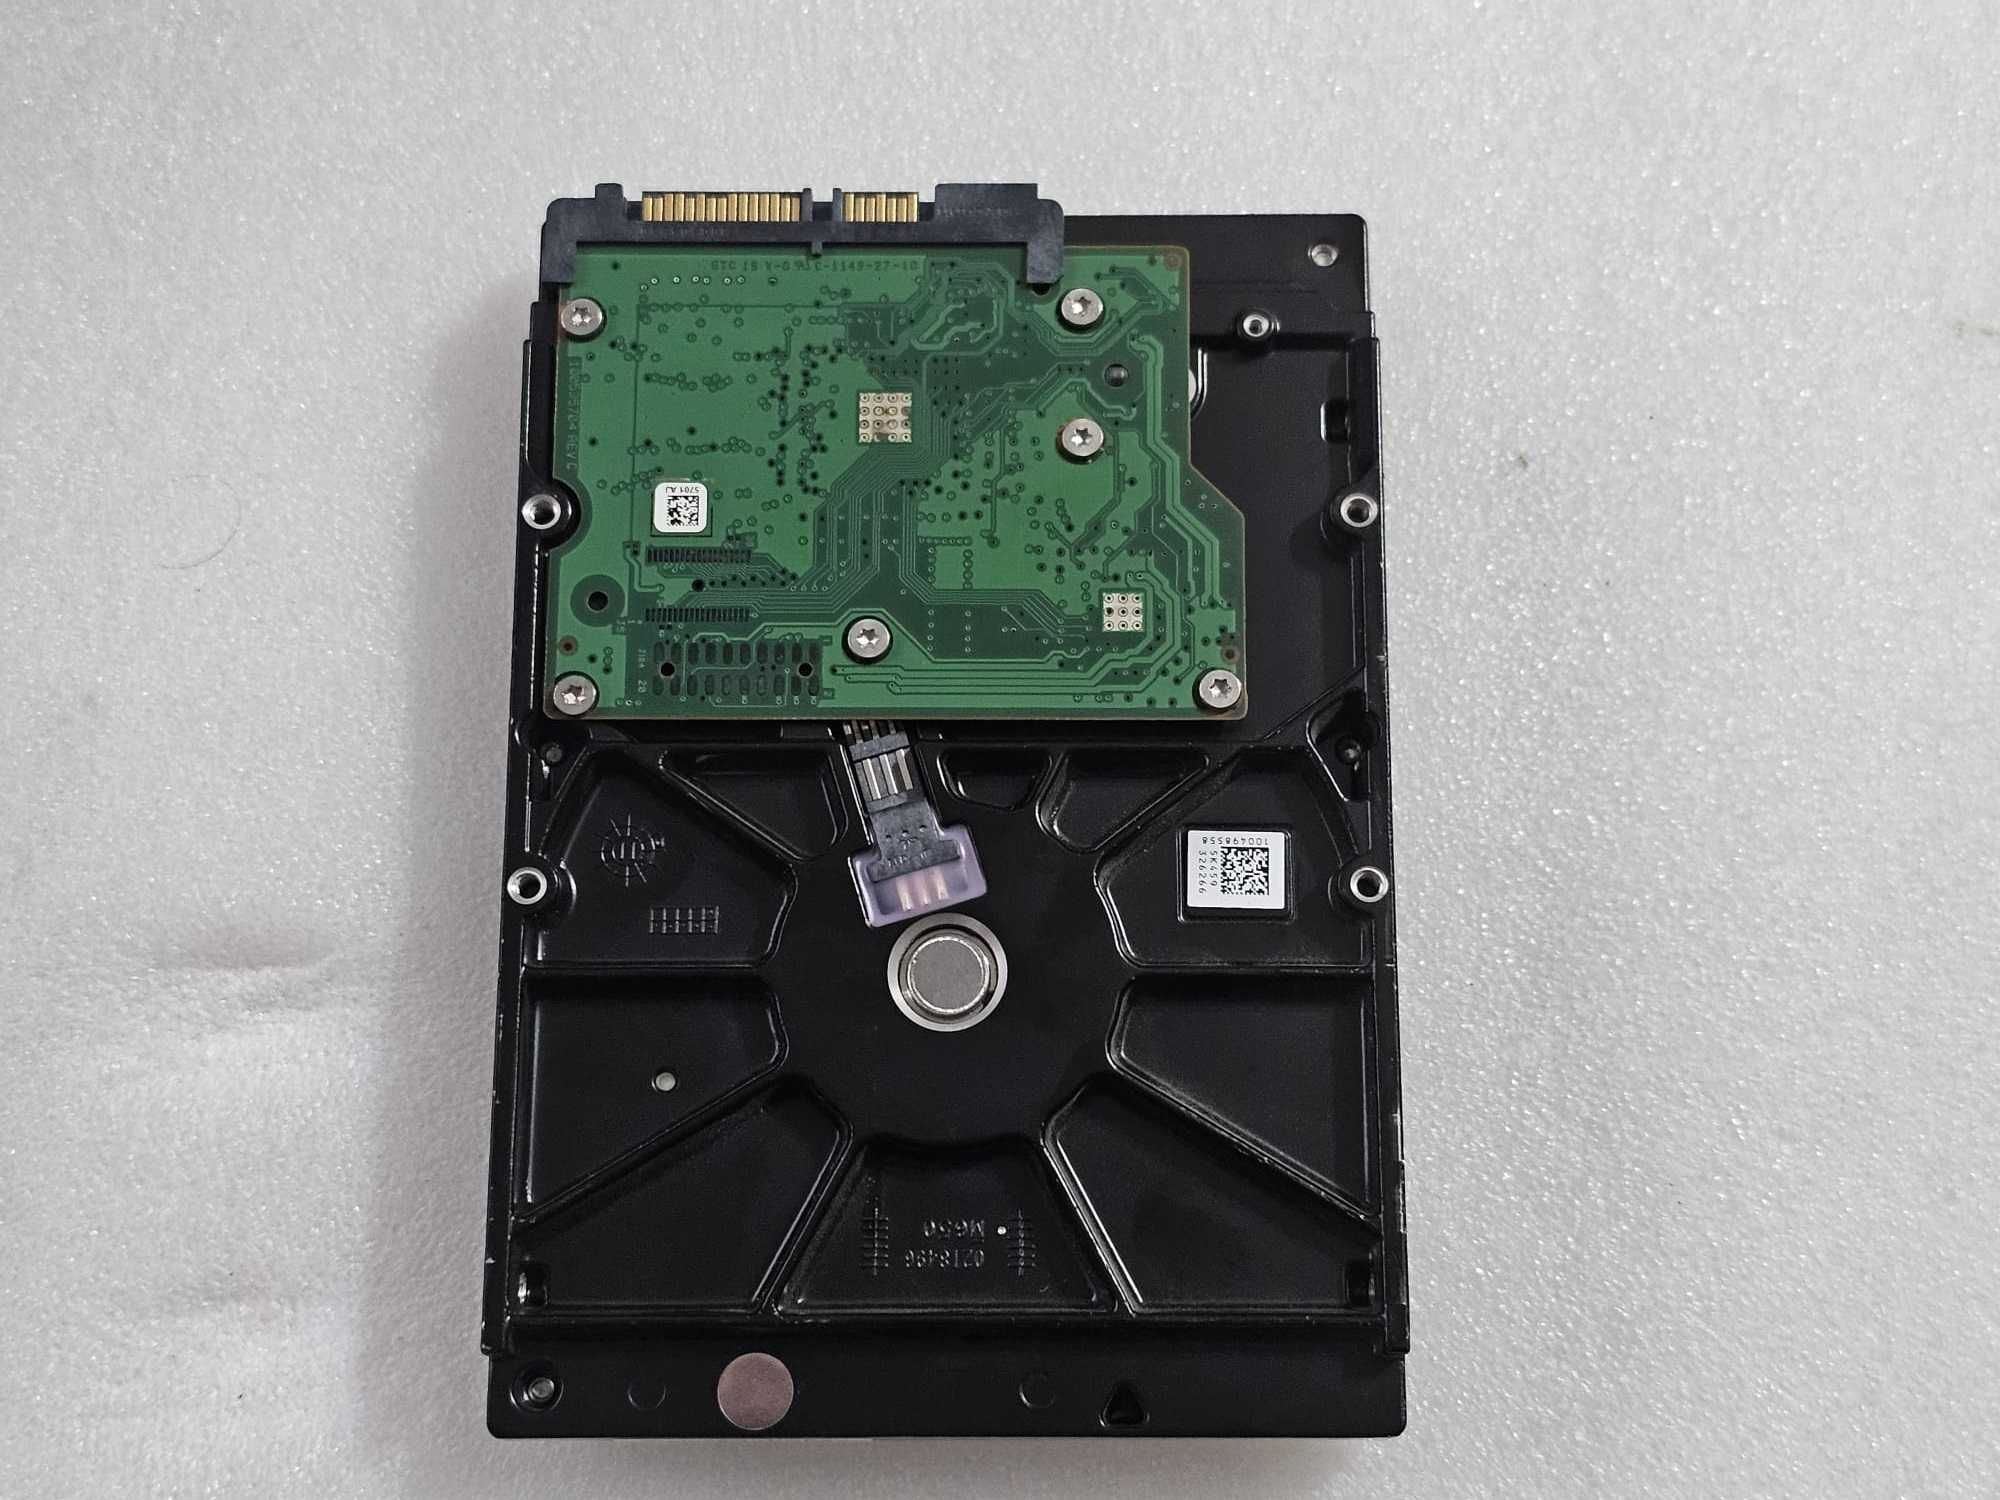 Hard disk Seagate BarraCuda 3.5 500GB 7200RPM 16MB SATA3 (ST500DM002)